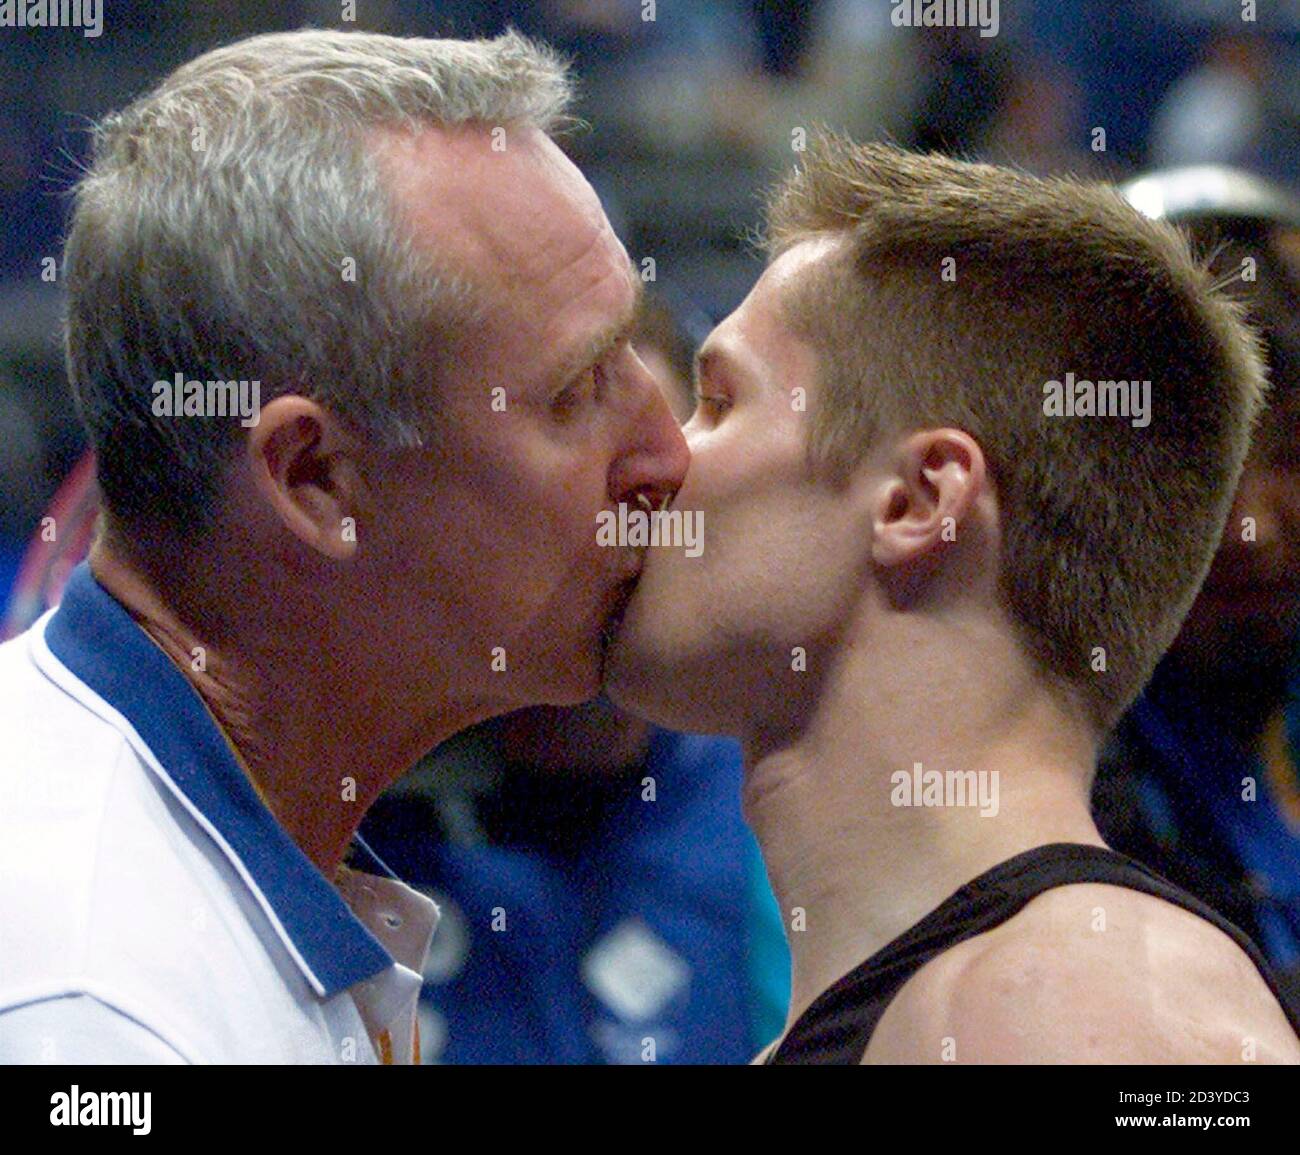 RUSSIA'S ALEXEI NEMOV RECEIVES A CONGRATULATORY KISS FROM COACH LEONID  ARKAEV AT THE SYDNEY 2000 OLYMPIC GAMES. Russia's Alexei Nemov (R) receives  a congratulatory kiss from head coach of Russia's gymnastic team